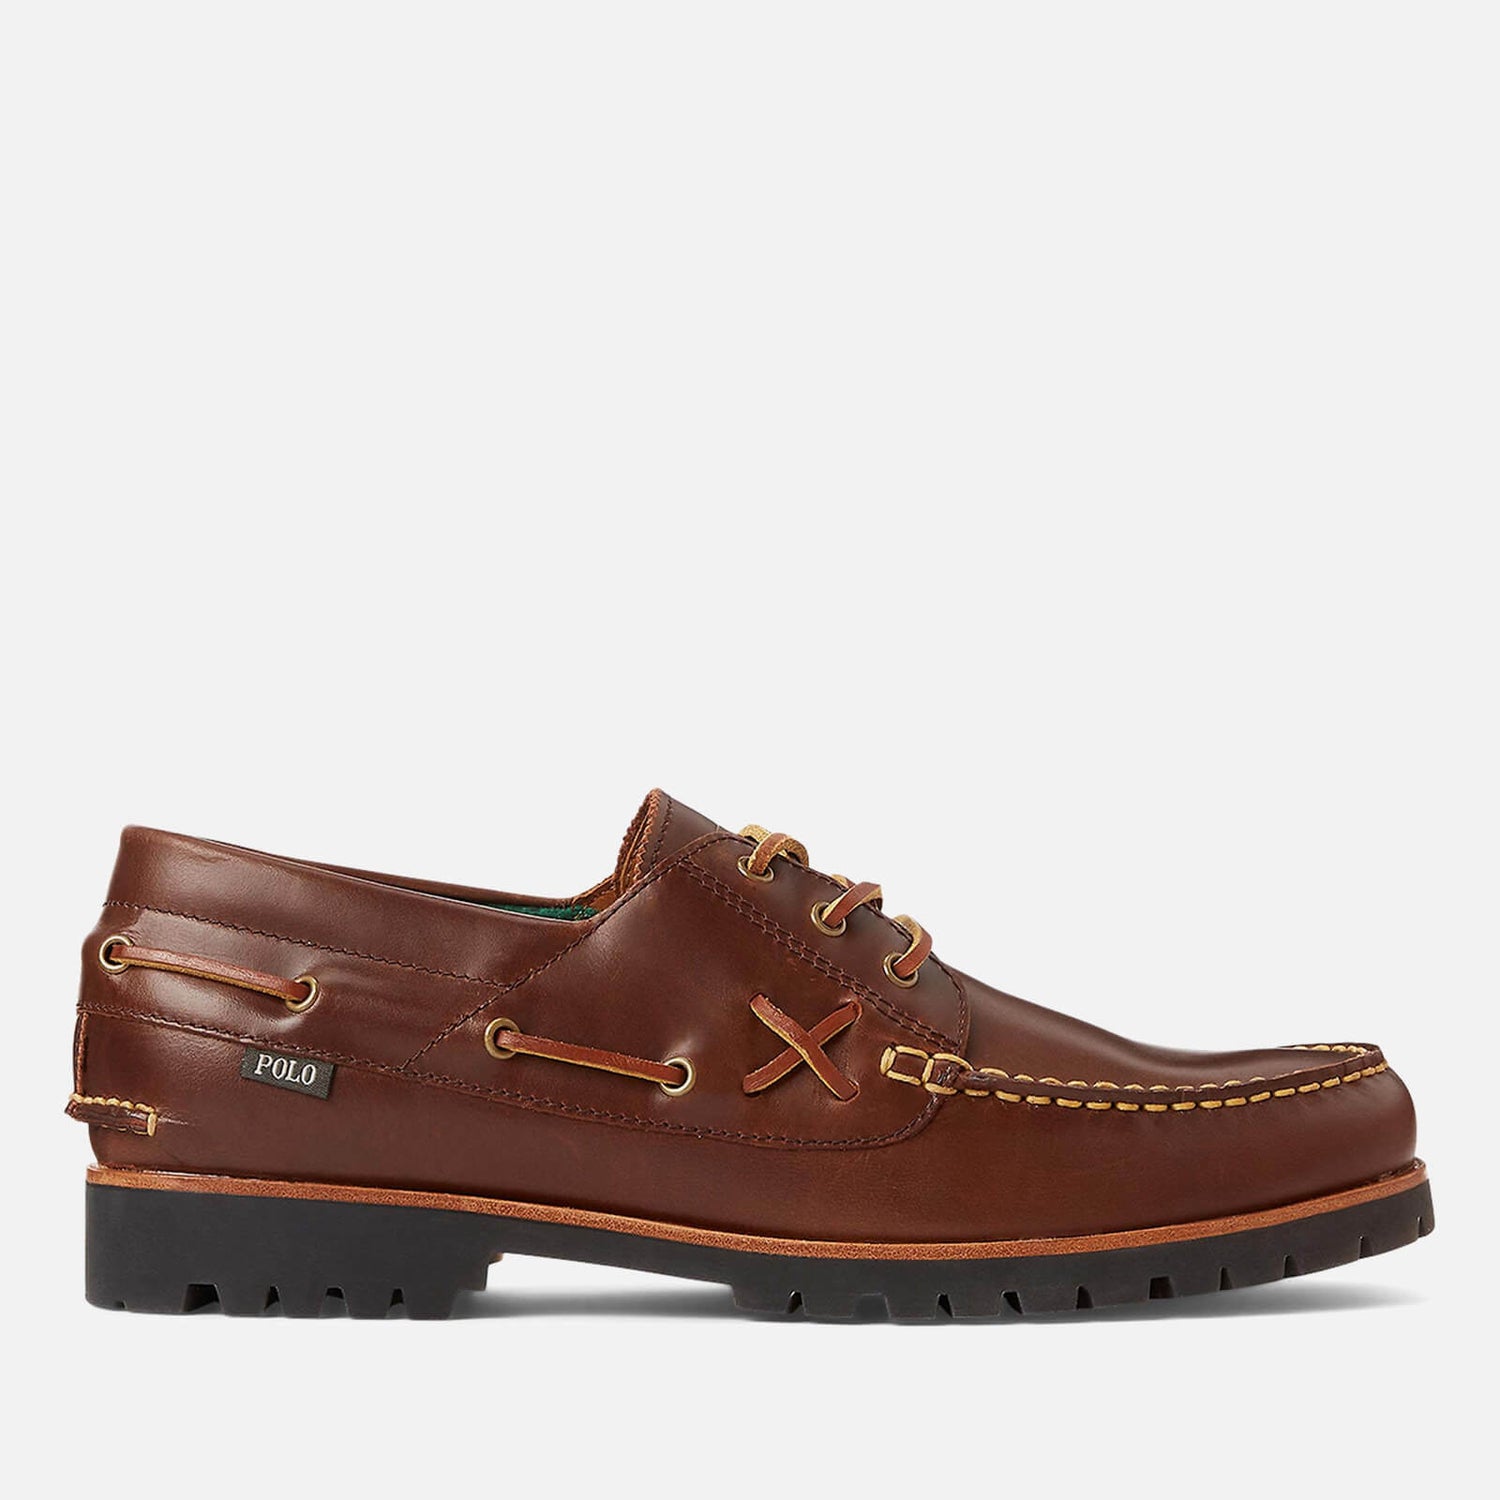 Polo Ralph Lauren Men's Leather Boat Shoes - UK 7